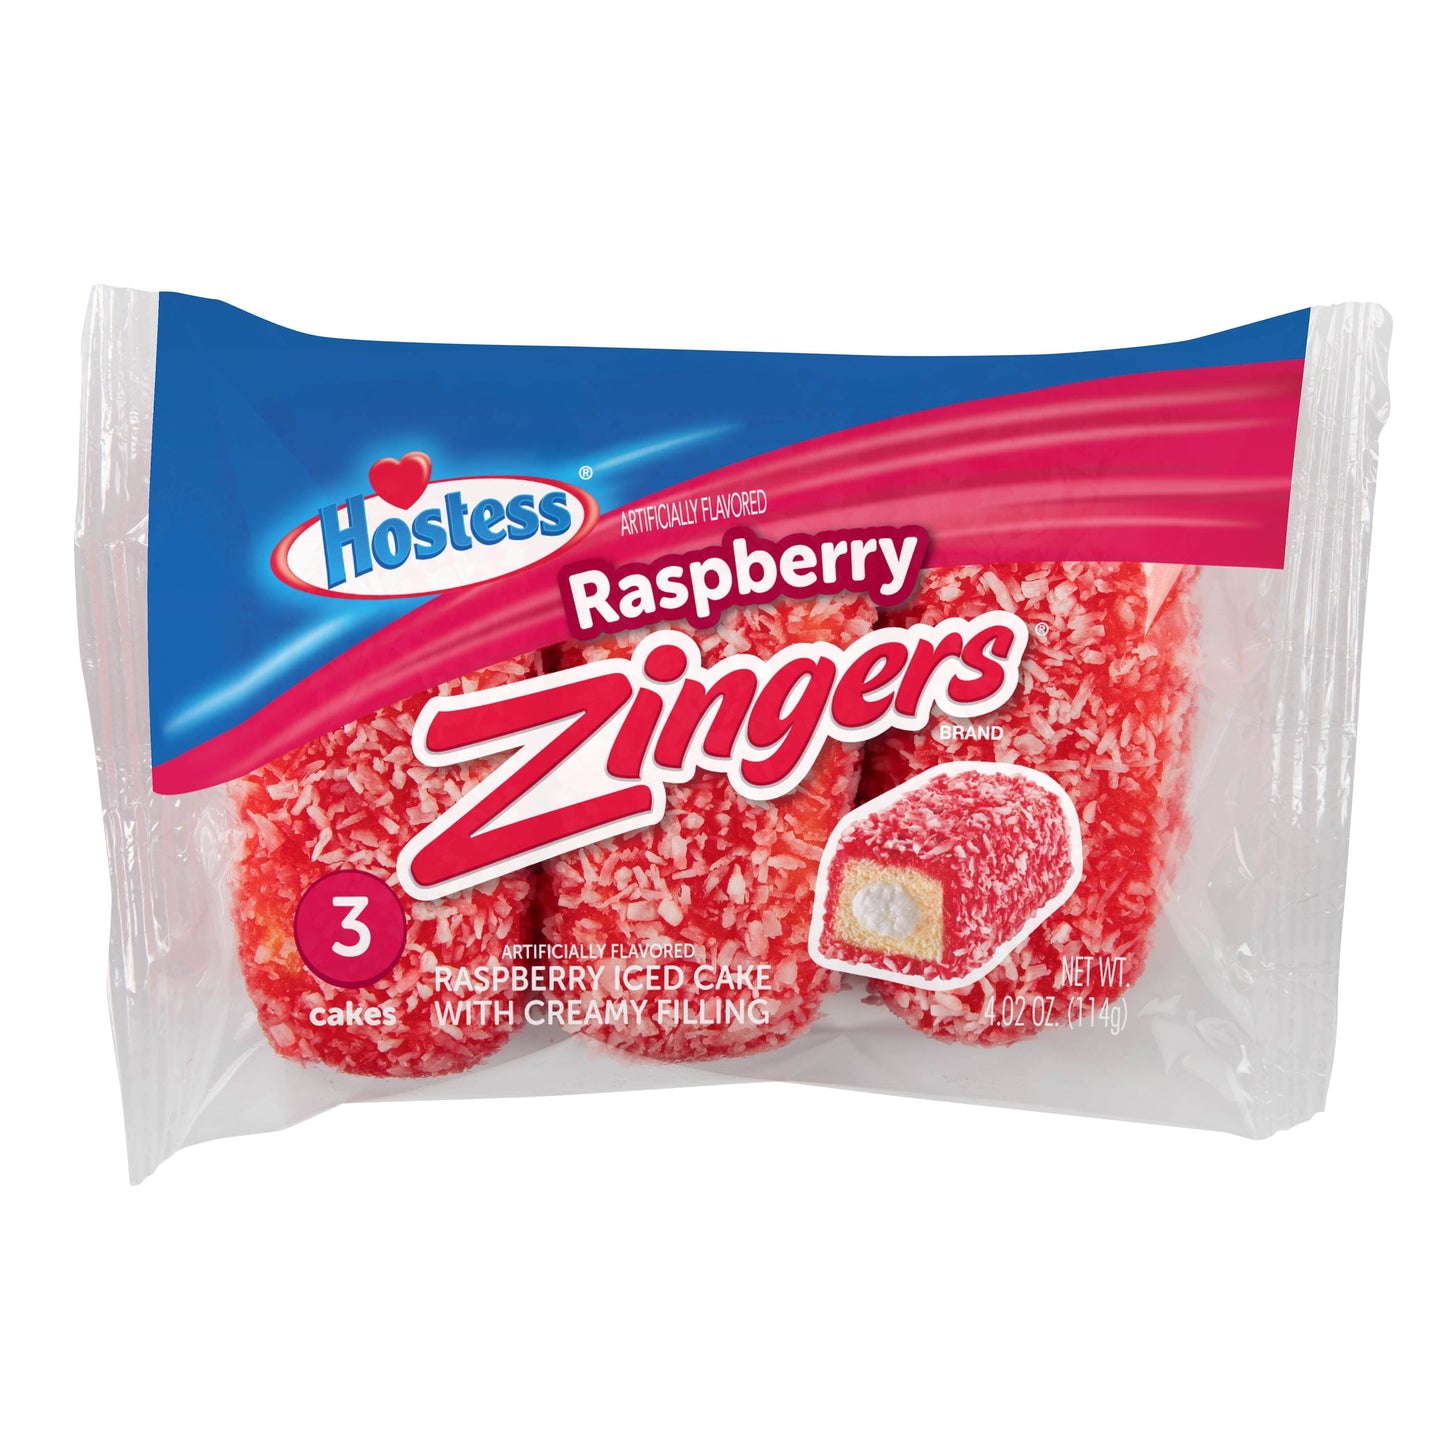 Hostess Raspberry Zingers, Single Serve, 3 Count, 4.02 oz